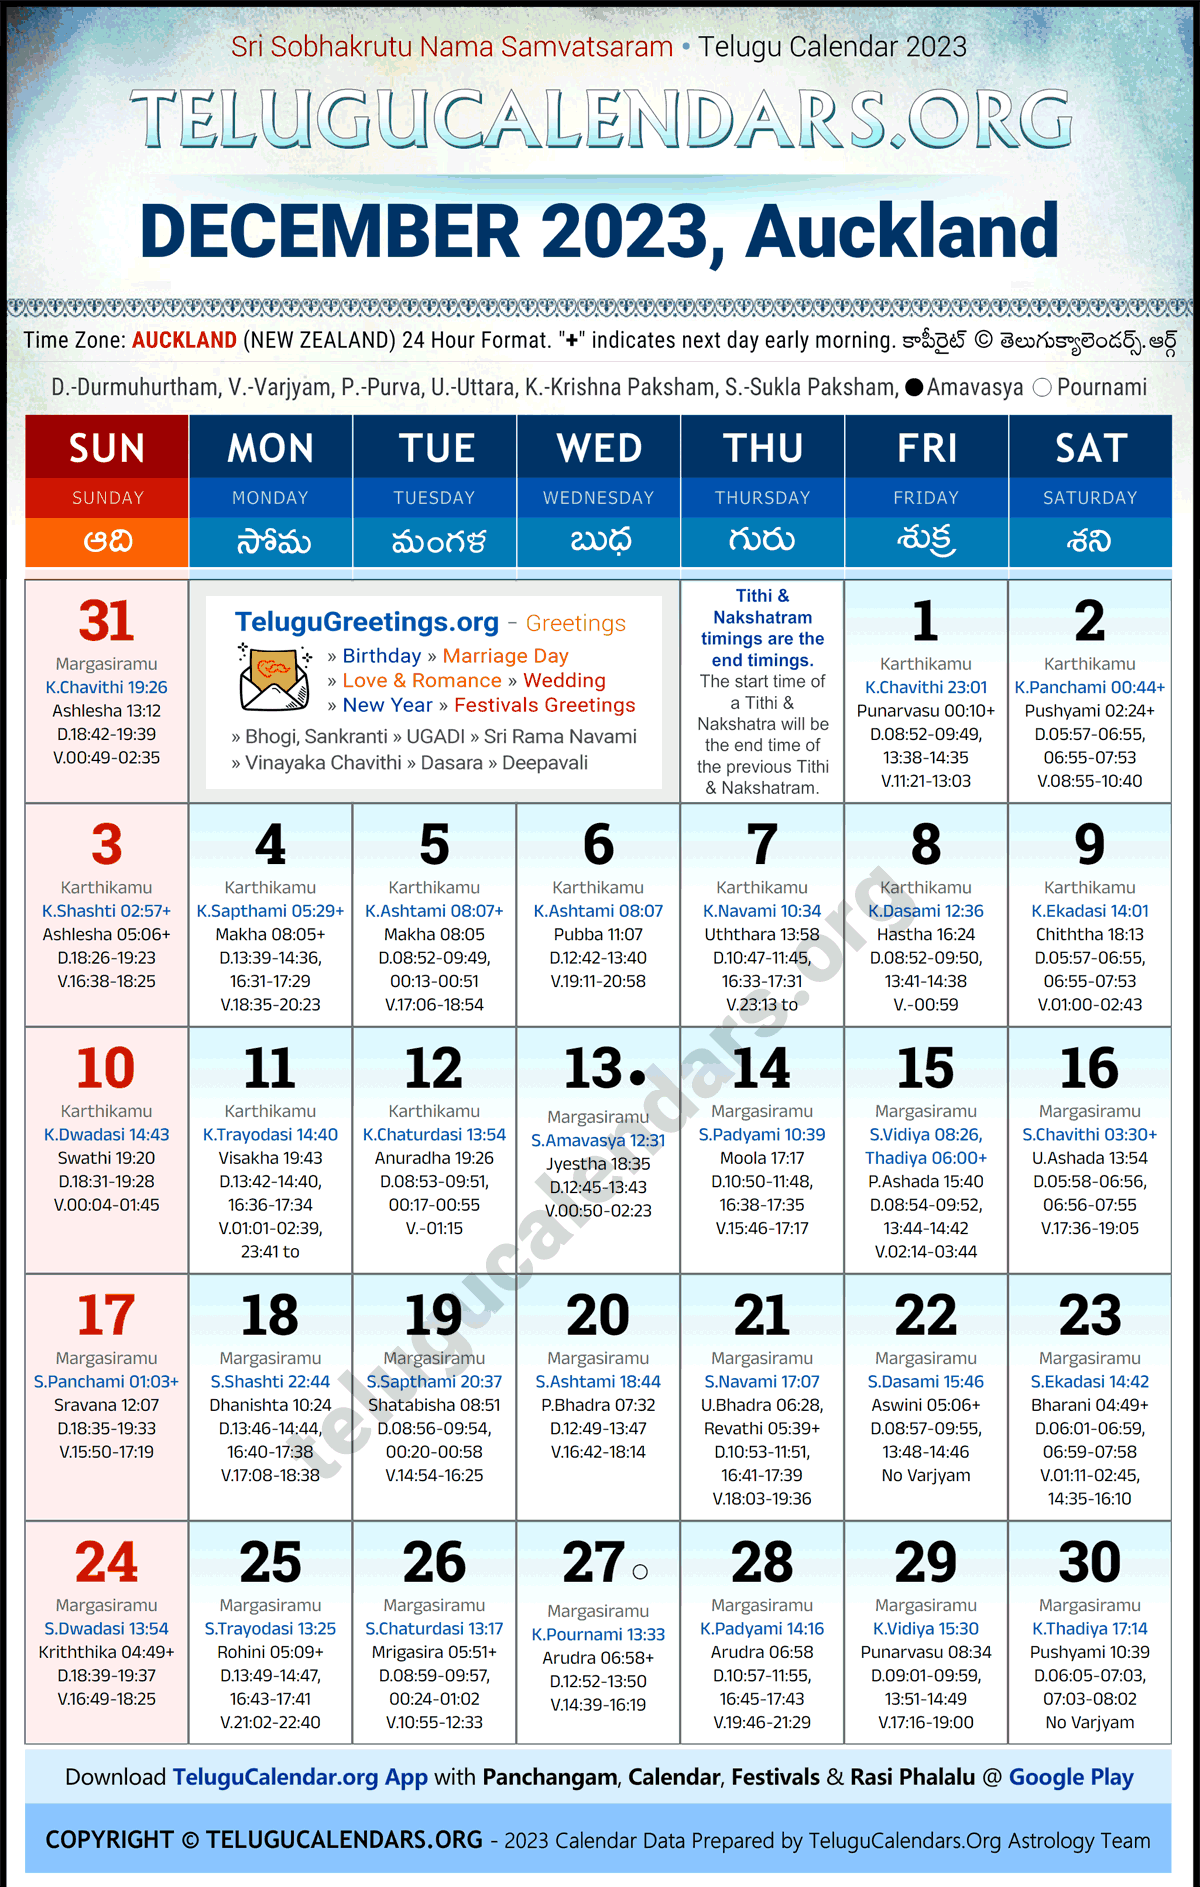 Telugu Calendar 2023 December Festivals for Auckland